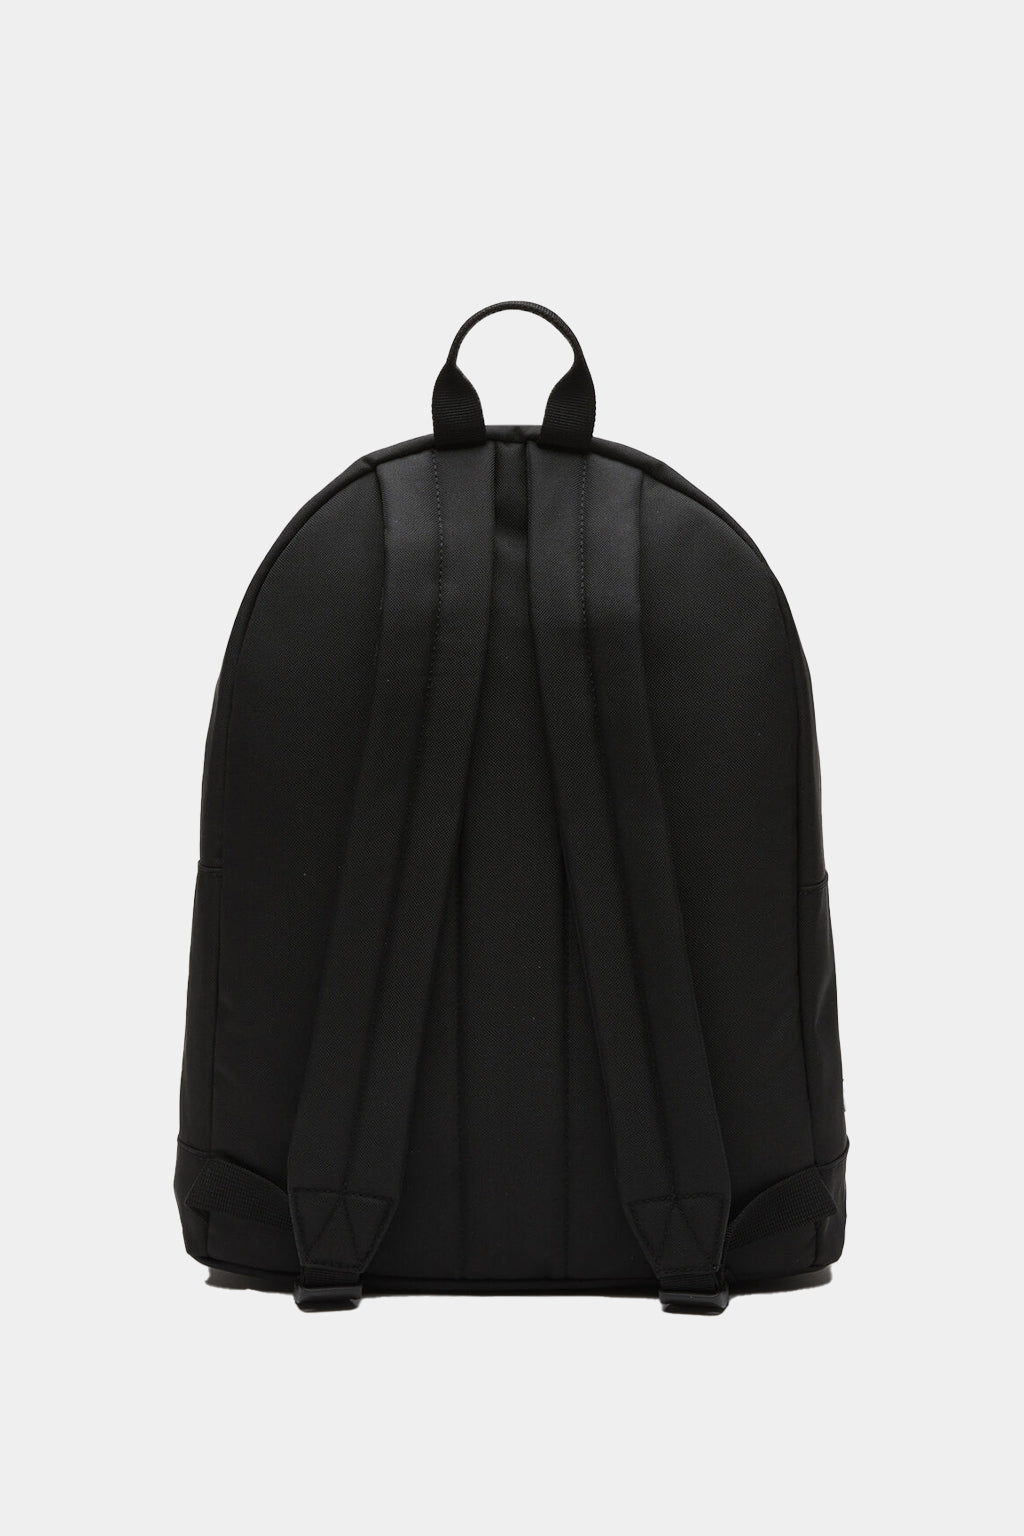 Lacoste - Noir Blanc Backpack